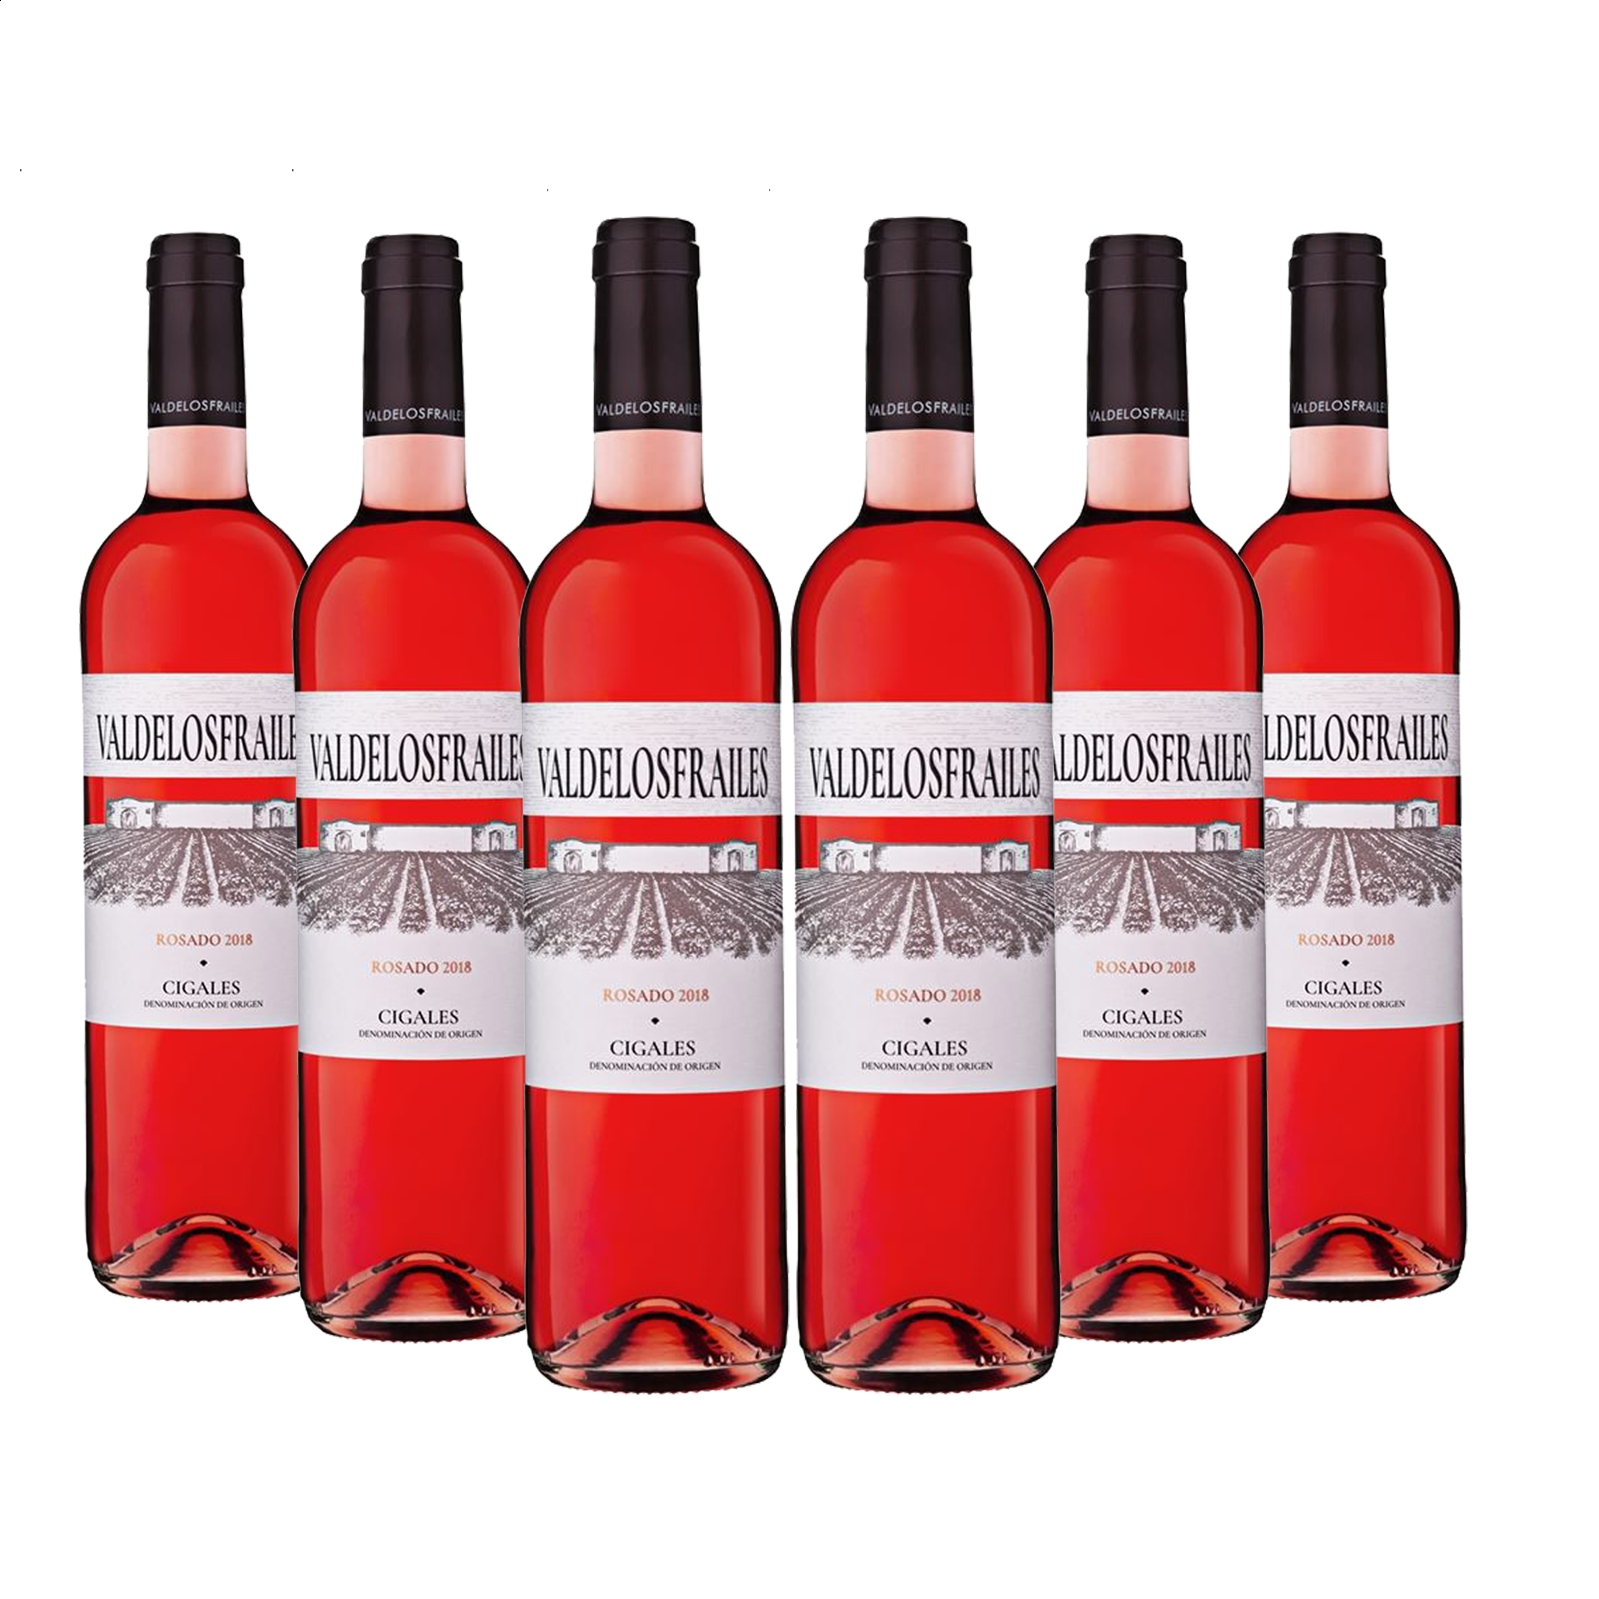 Bodega Matarromera - Valdelosfrailes vino rosado D.O. Cigales 75cl, 6uds